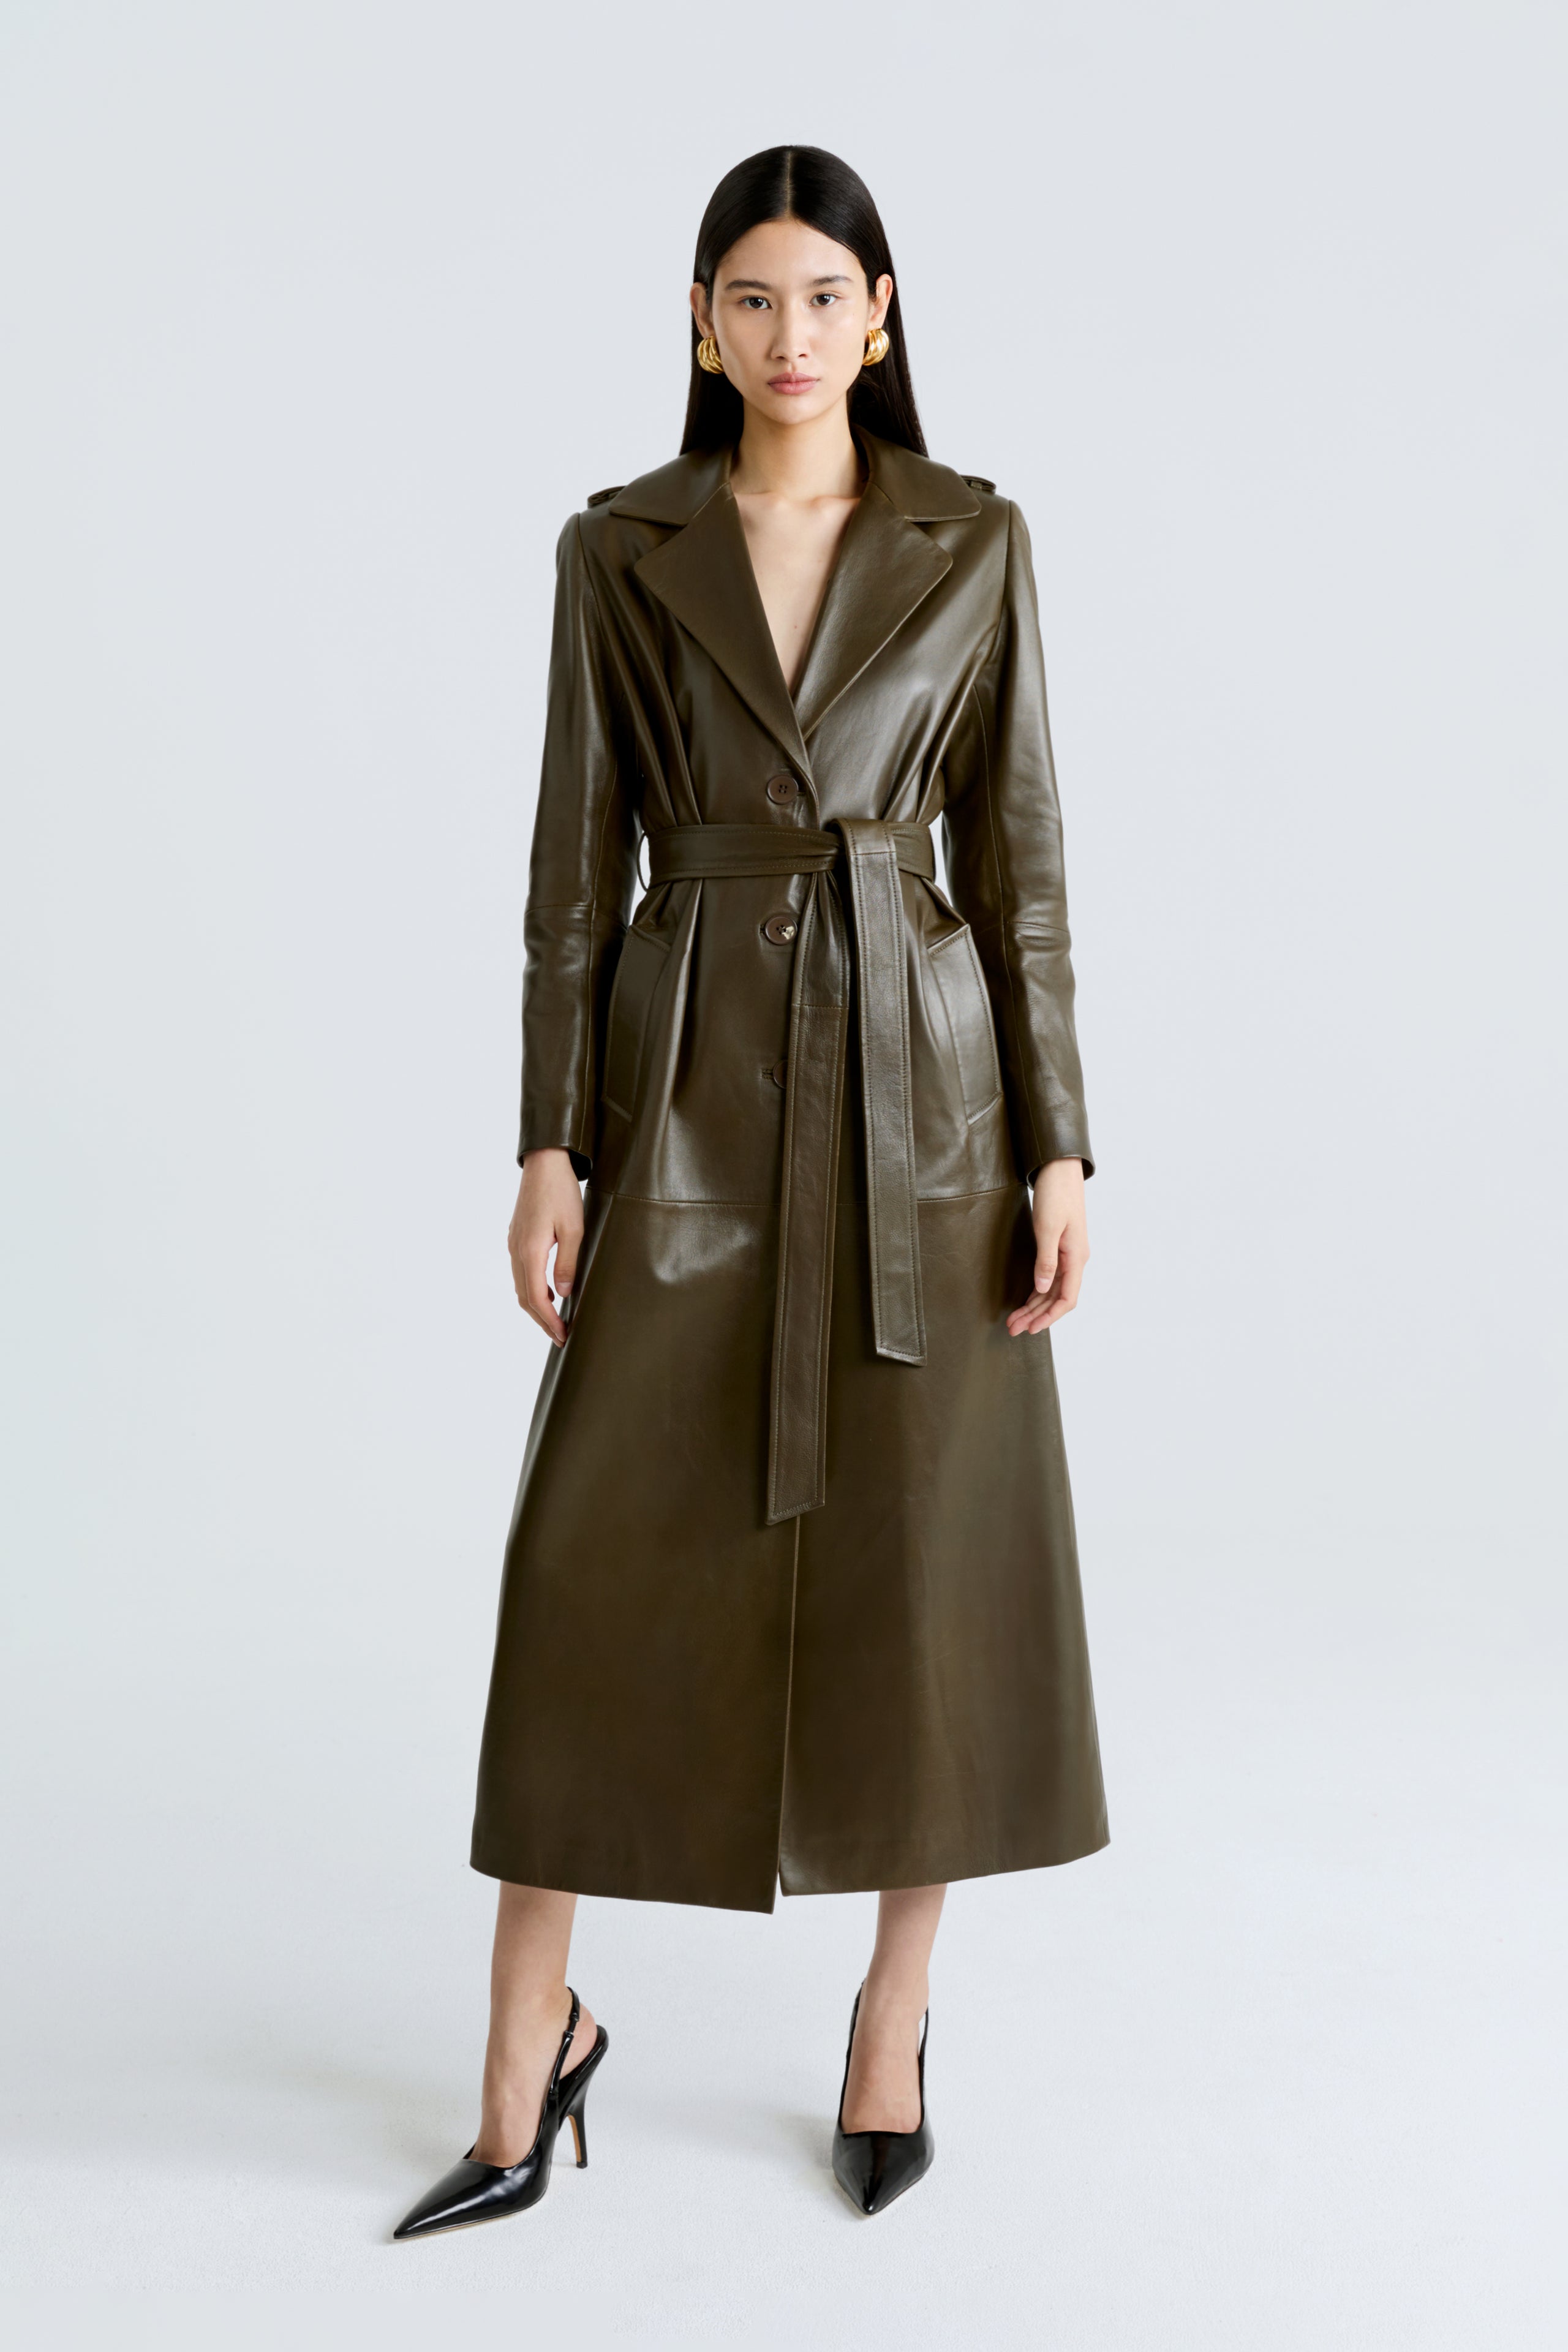 Model is wearing the Scarlett Zeytoun Belted Leather Coat Front